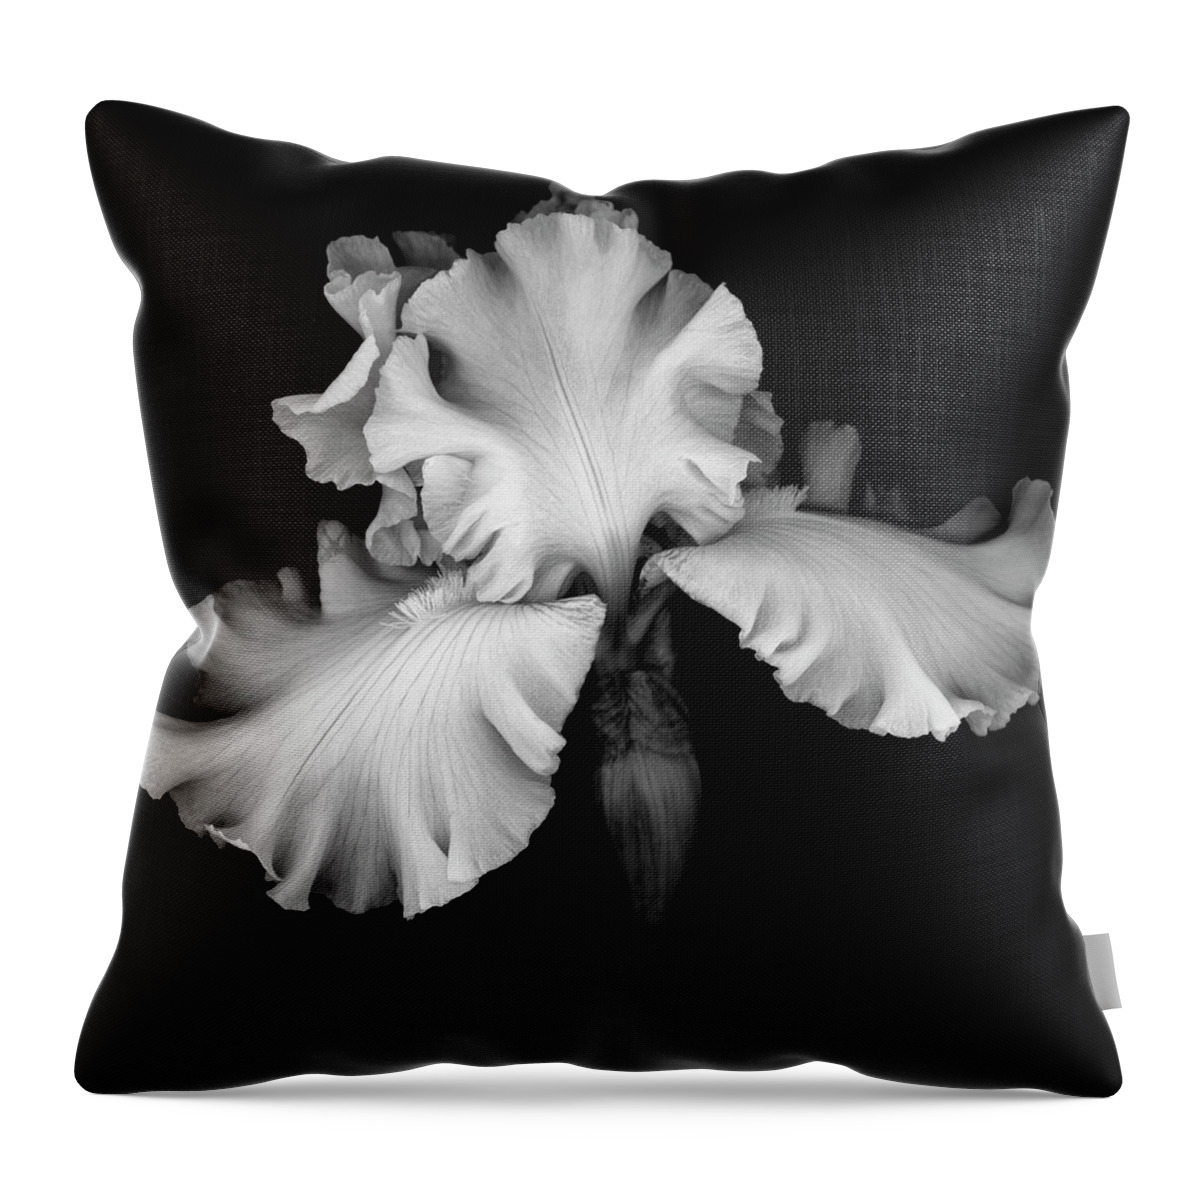 Black Throw Pillow featuring the photograph White Iris by Oscar Gutierrez